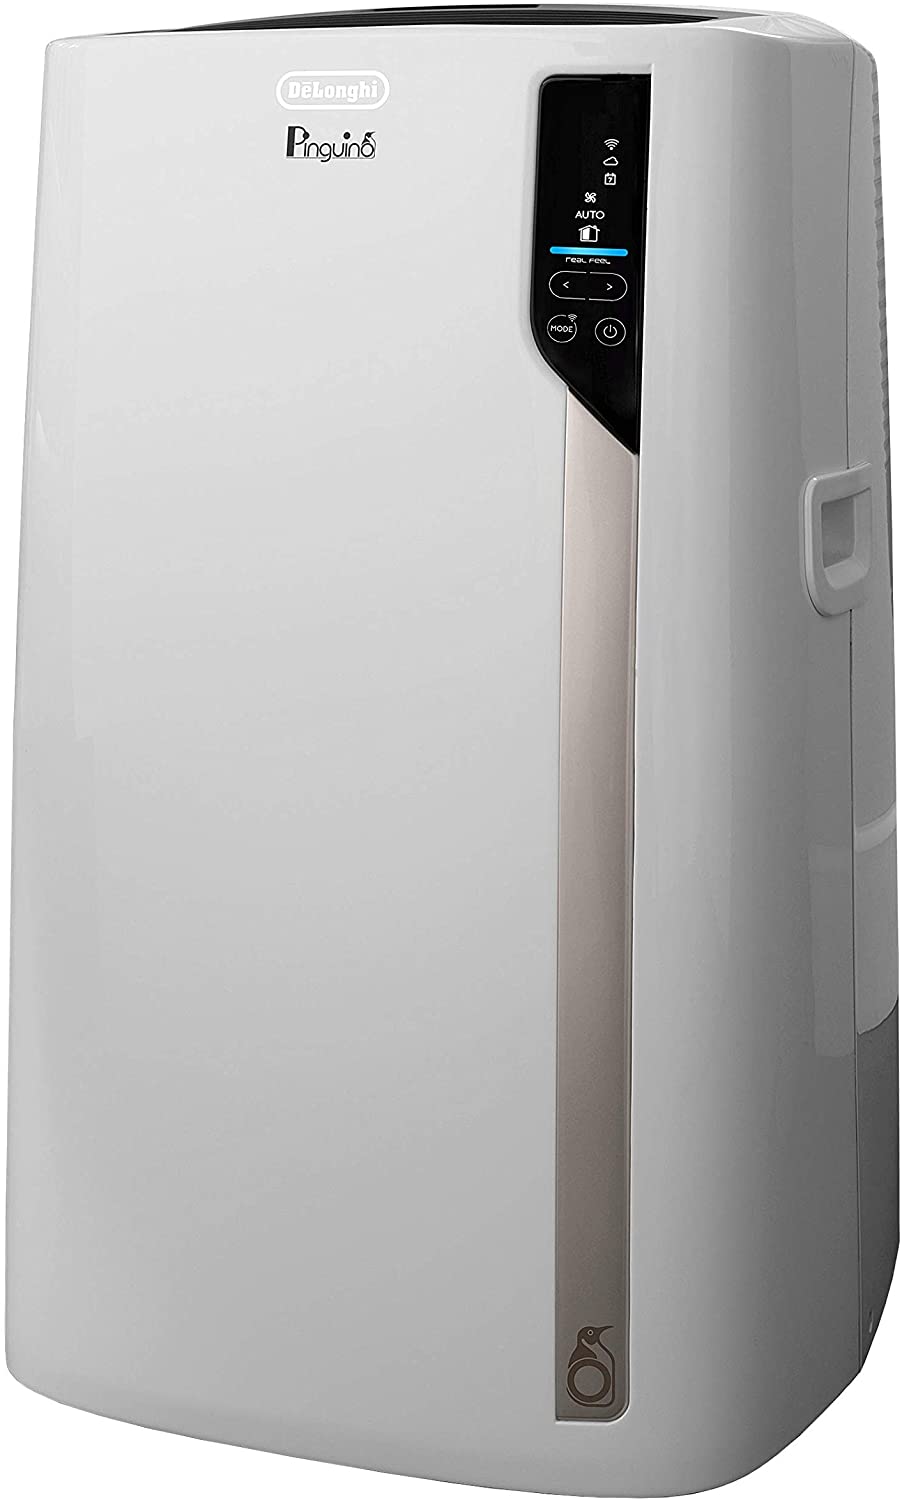 DeLonghi Pinguino 4-in-1 Portable Air Conditioner